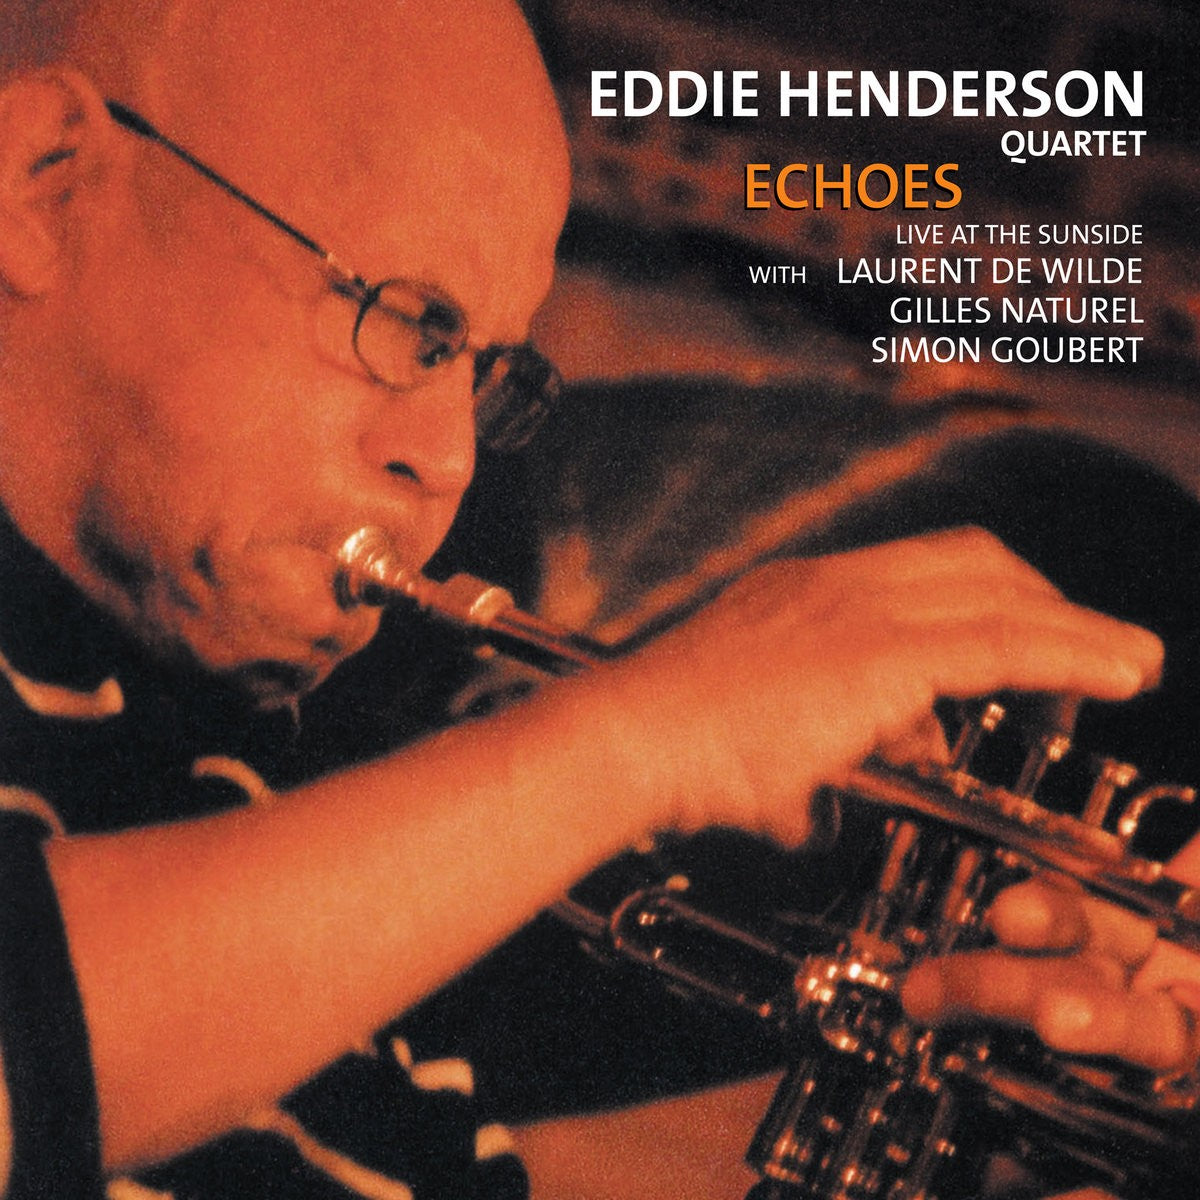 Pochette de : ECHOES - EDDIE HENDERSON QUARTET (CD)